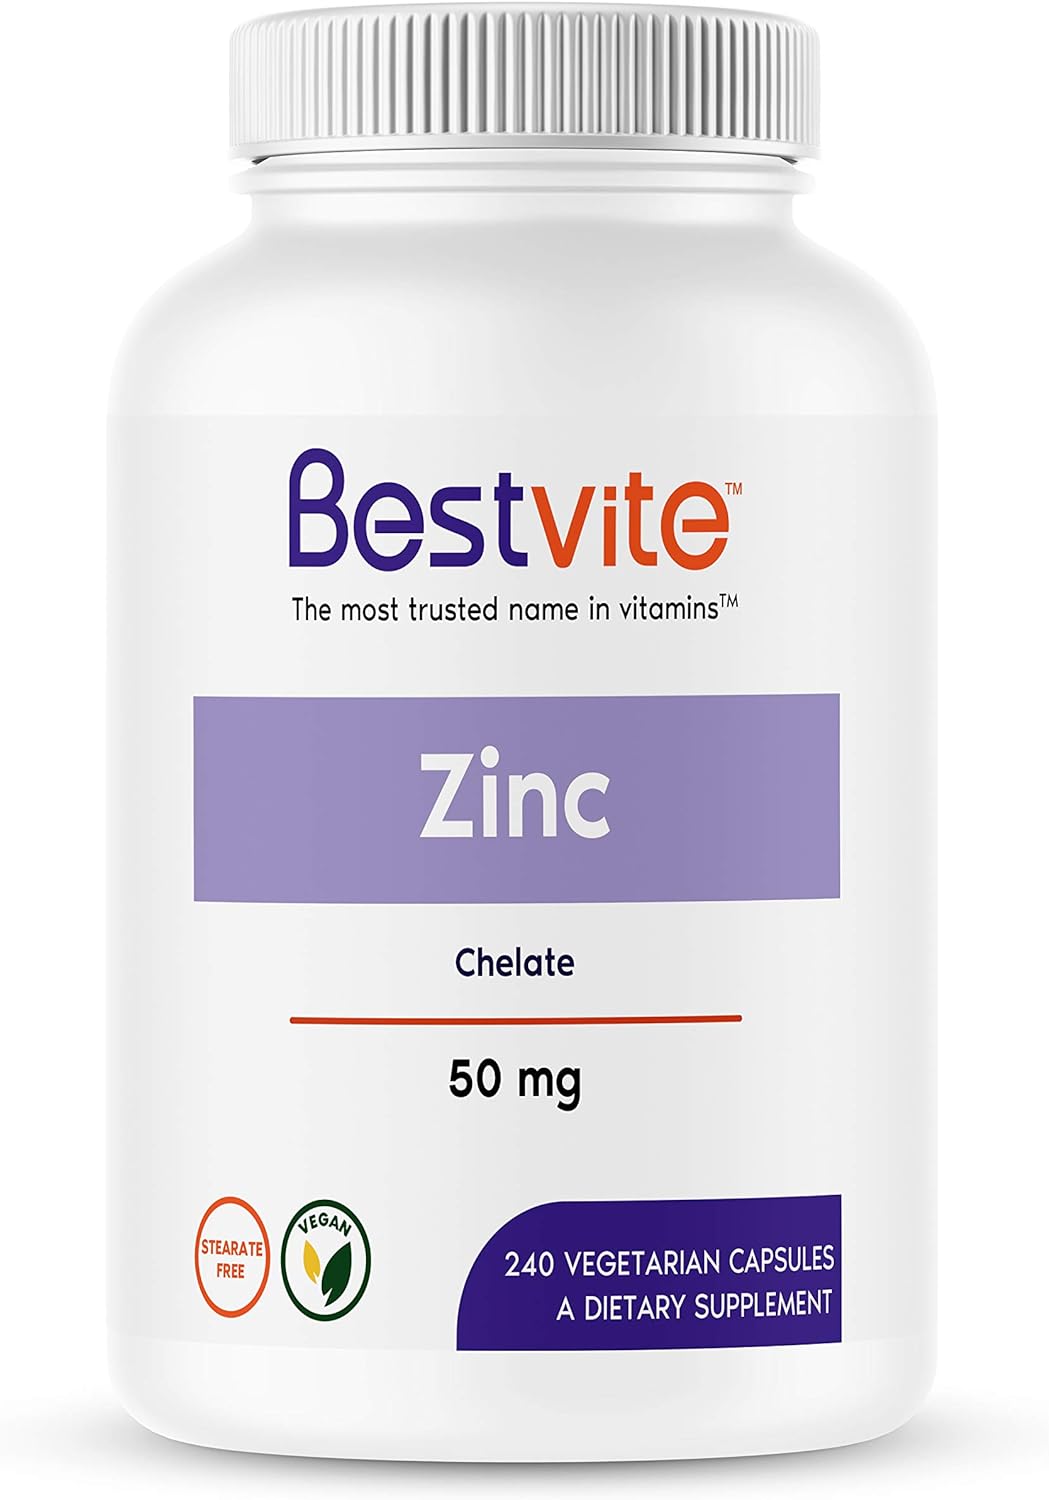 BESTVITE Zinc Chelate 50mg (240 Vegetarian Capsules) - No Stearates -